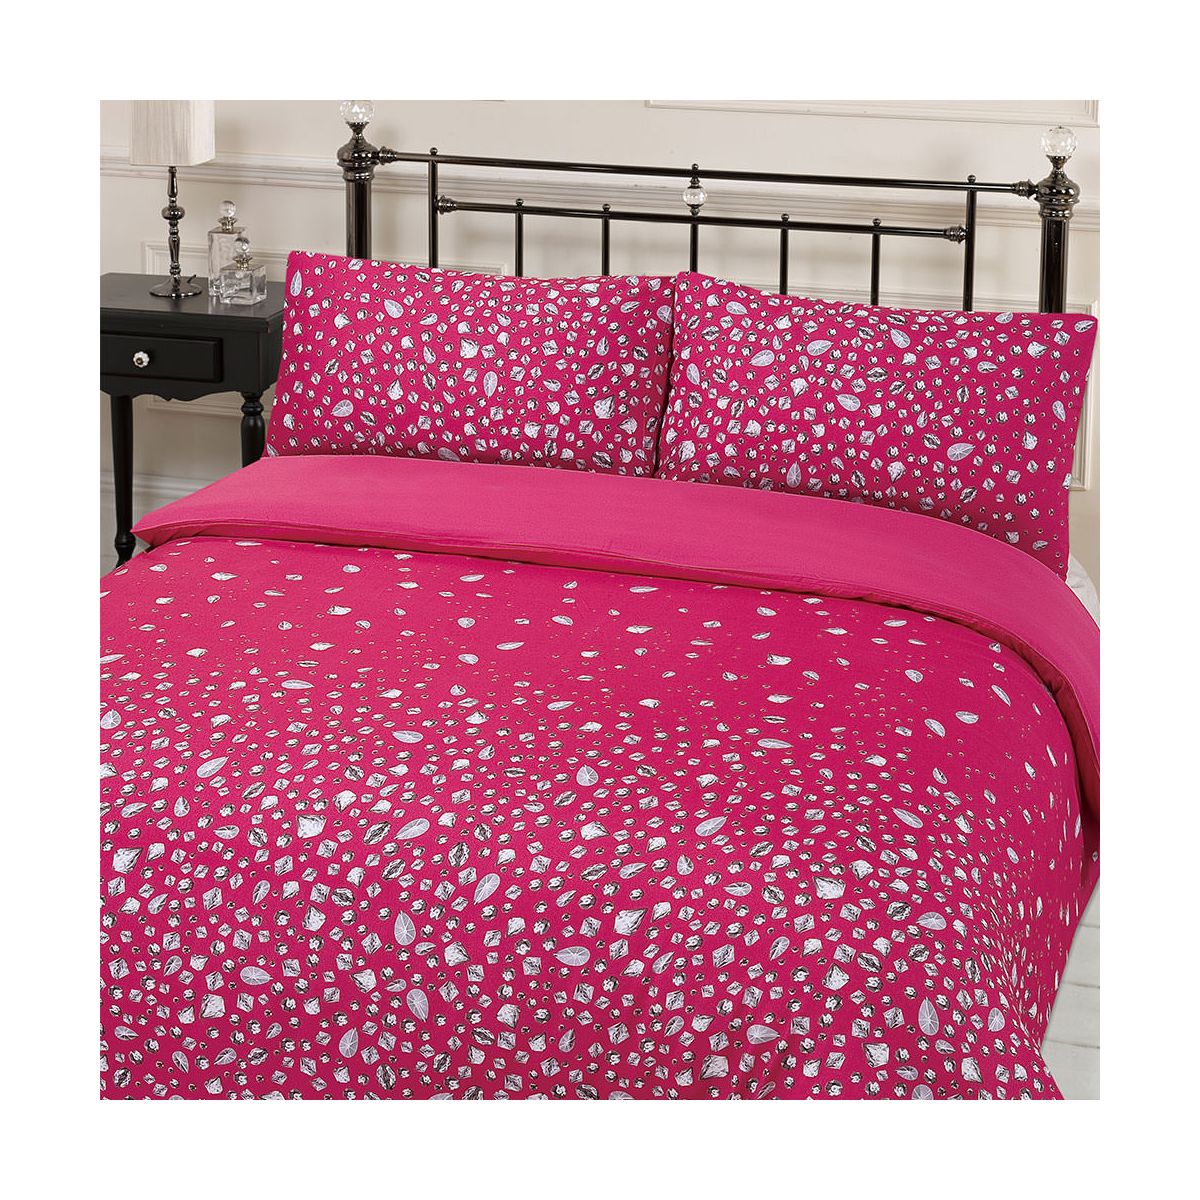 Dreamscene Glitz Gem Print Sparkle Quilt Duvet Cover With Pillowcases Bedding Set Pink - Super King